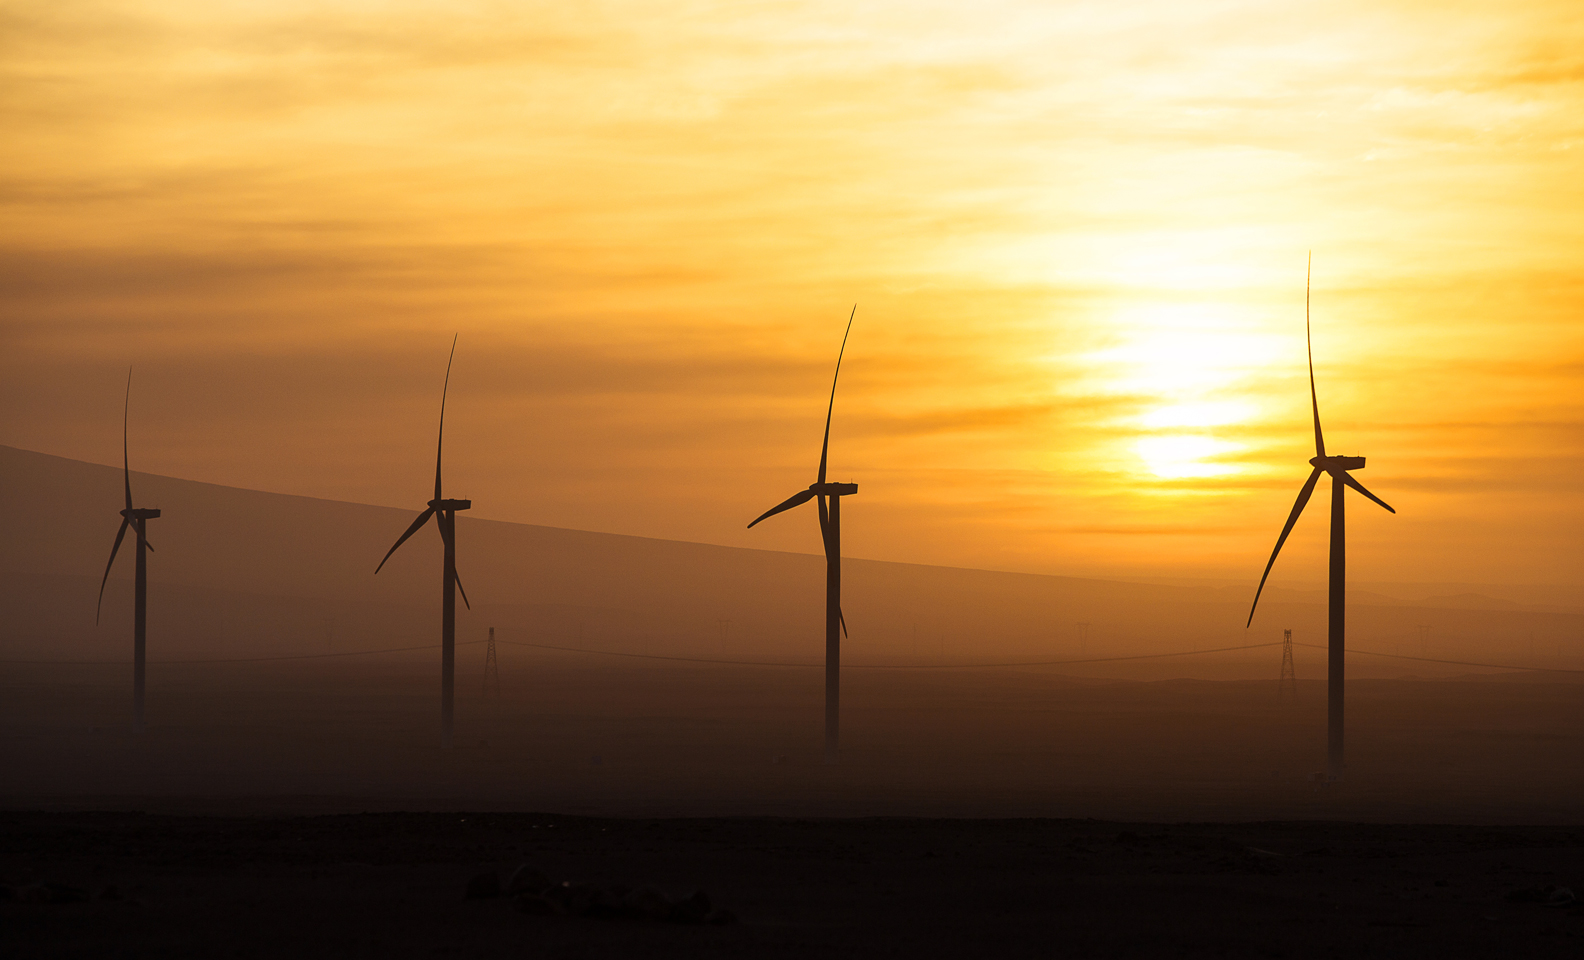 The Wayra wind farm in Peru at sunset